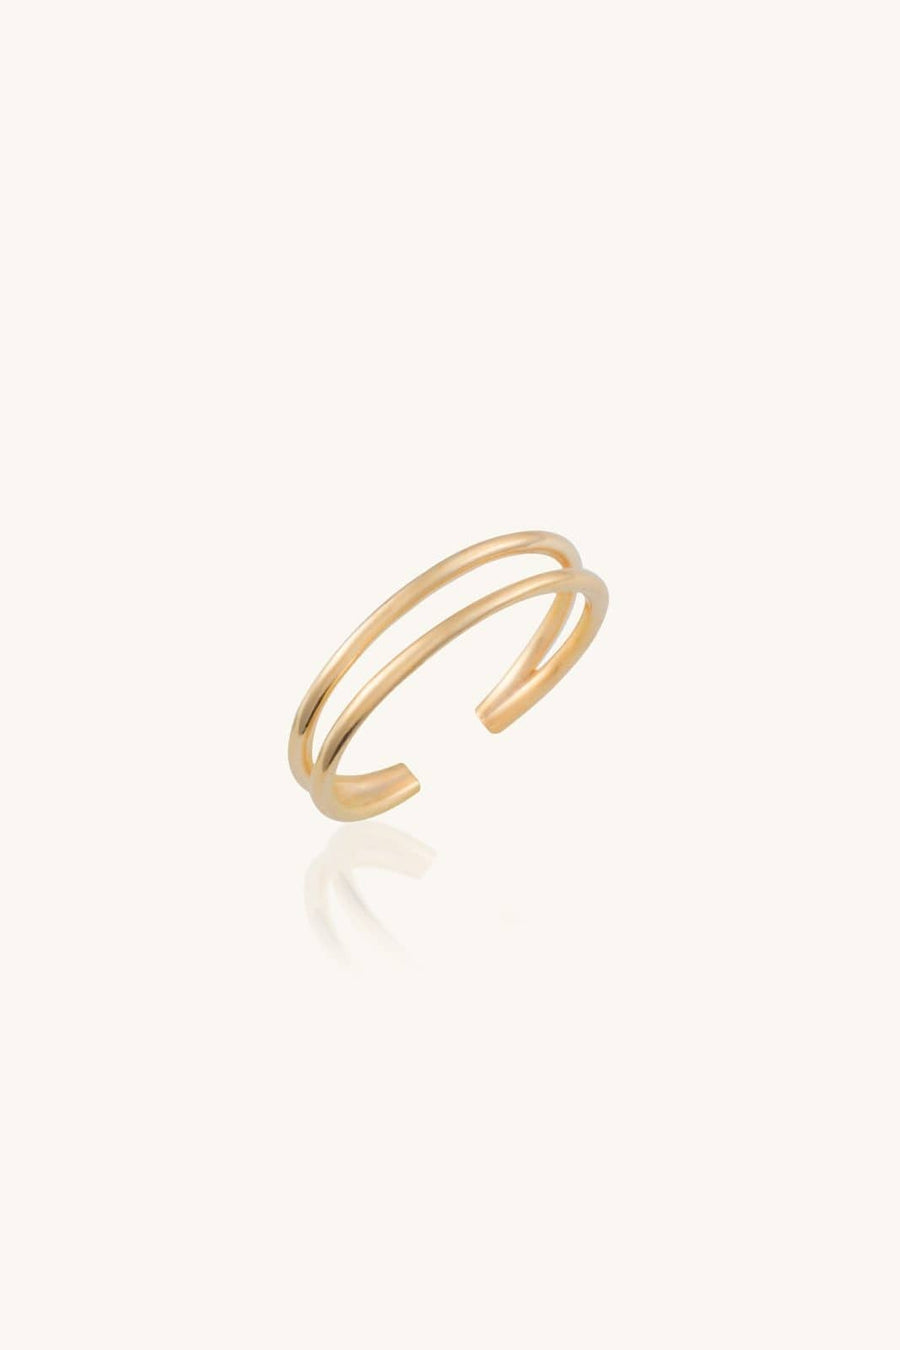 slender, double band, ring, minimalist, elegant, modern, versatile